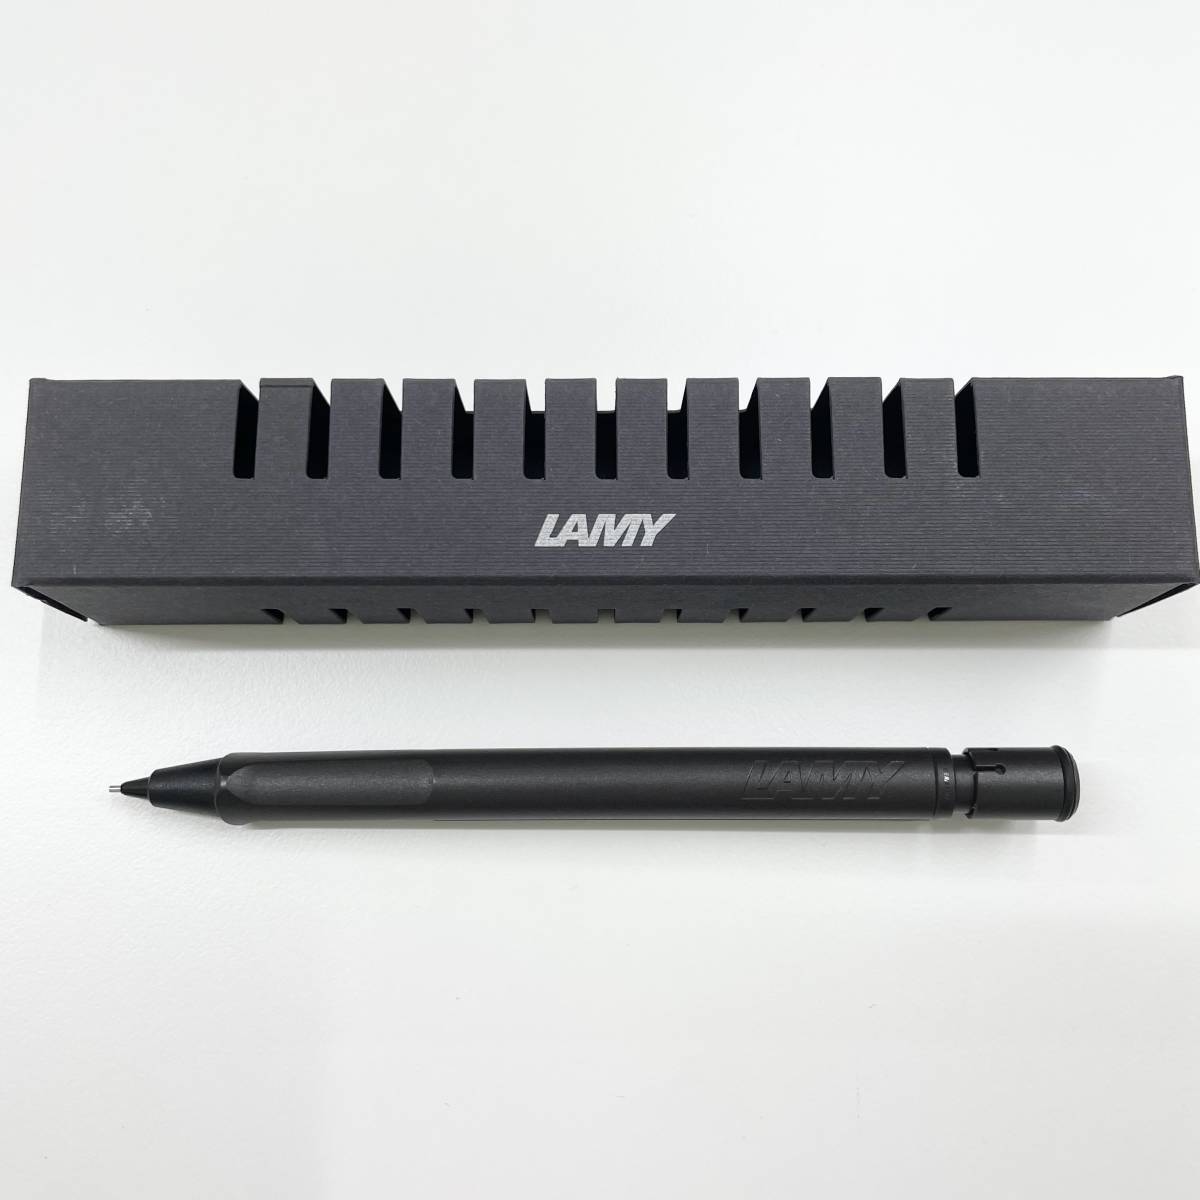 LAMY/ラミー シャーペン シャープペンシル 0.5mm ブラック 箱あり 筆記具 文房具 筆記確認済み 管1187_画像1